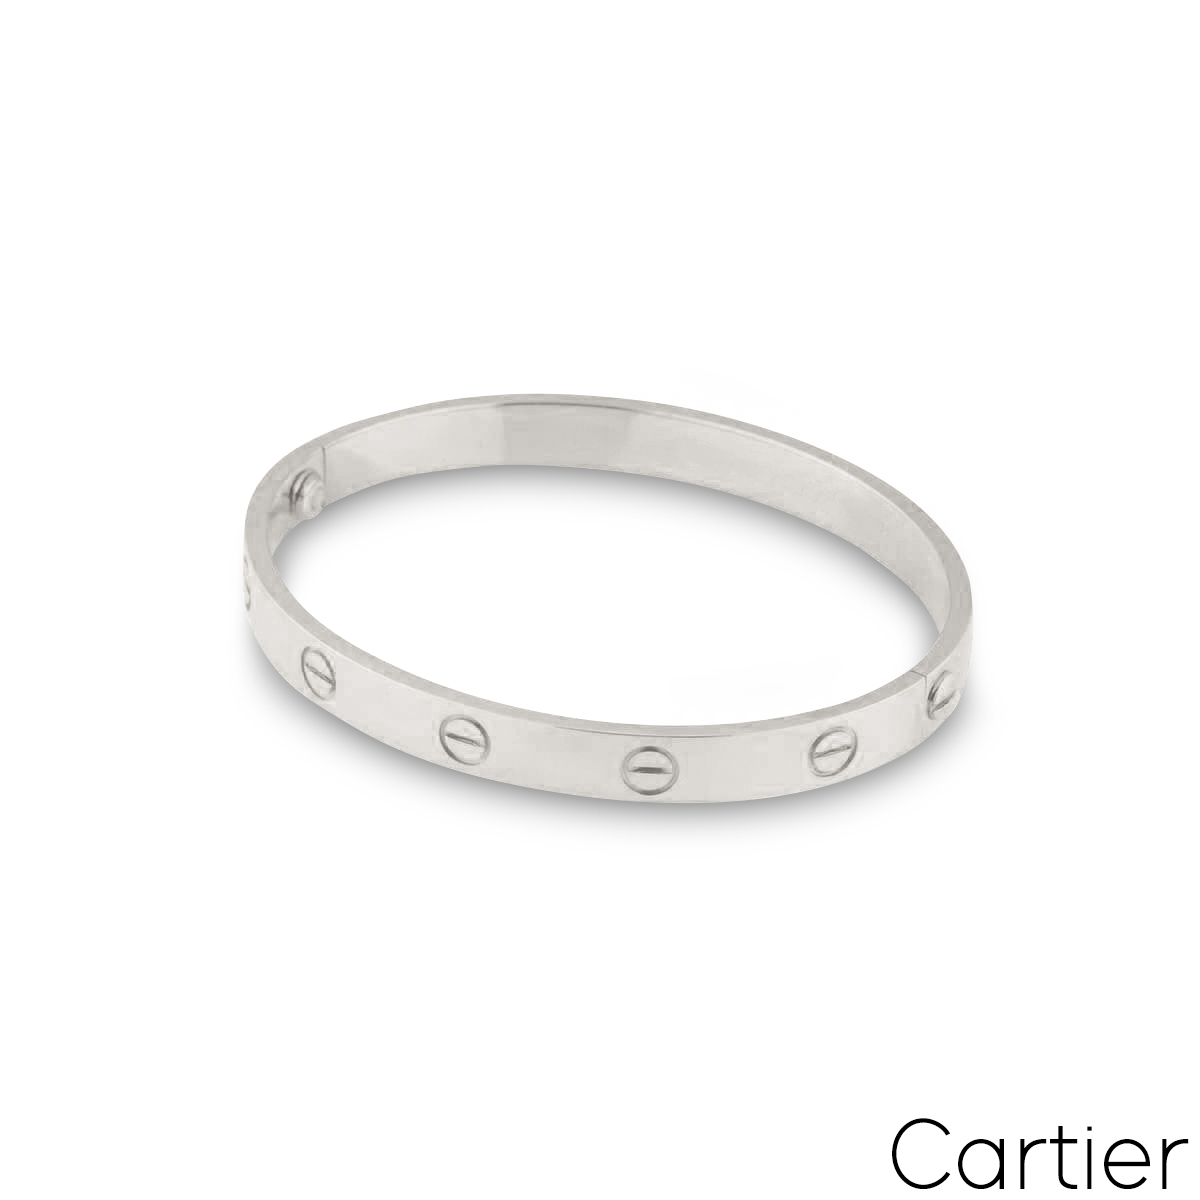 Cartier White Gold Plain Love Bracelet Size 20 B6035420